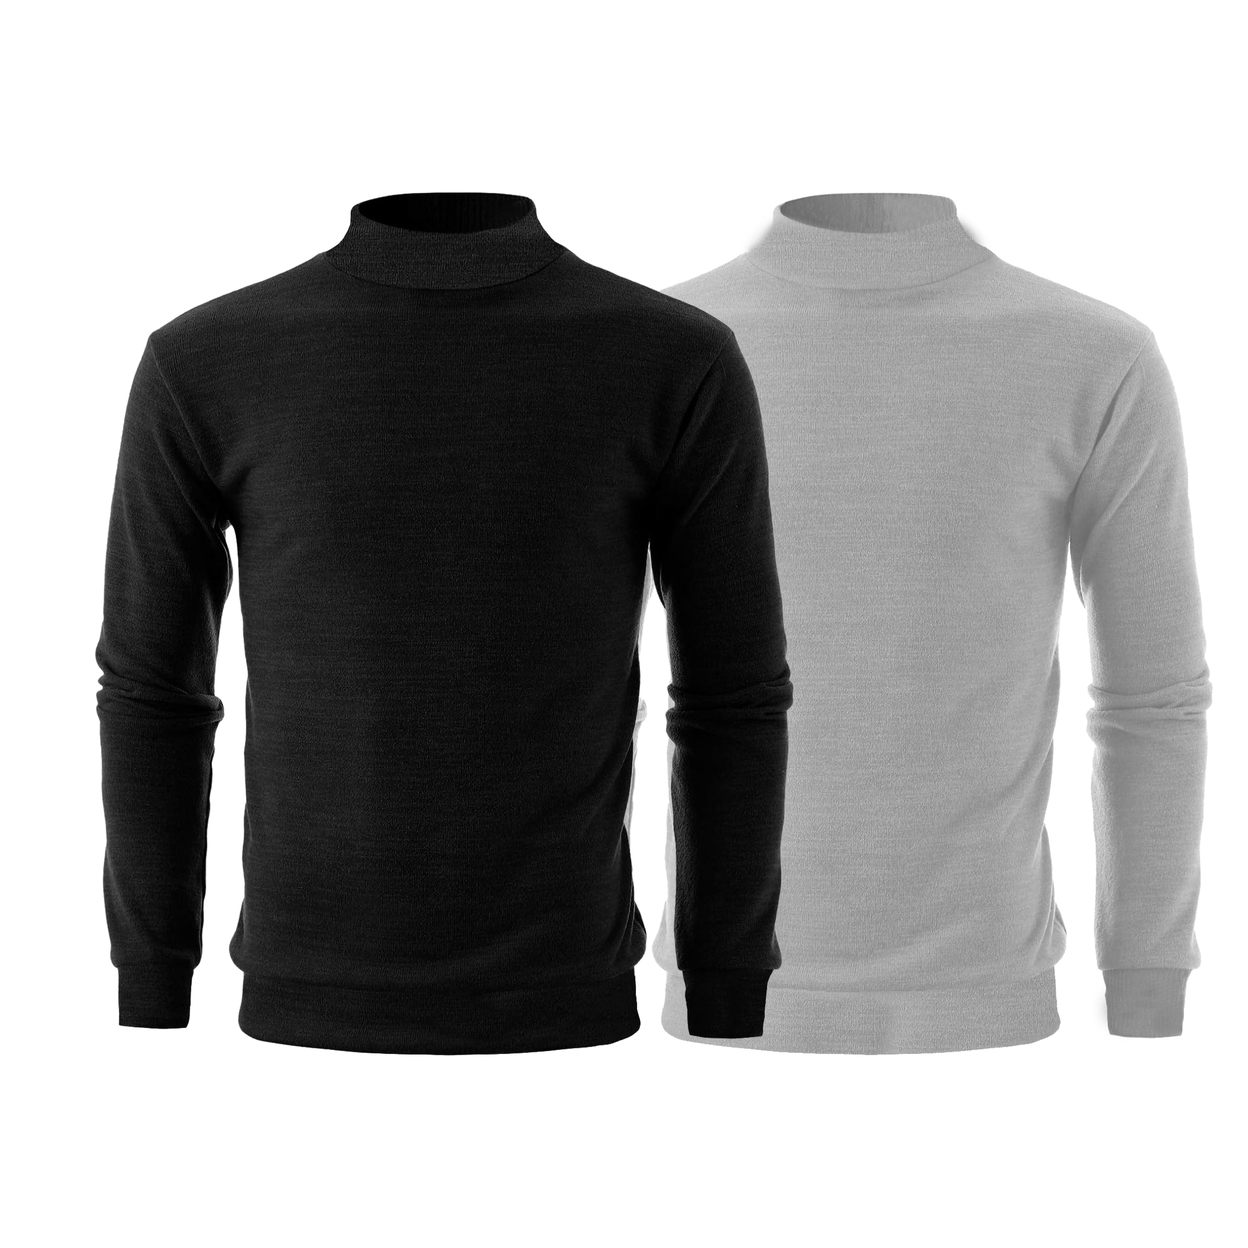 2-Pack: Men's Winter Warm Cozy Knit Slim Fit Mock Neck Sweater - White & Charcoal, Medium